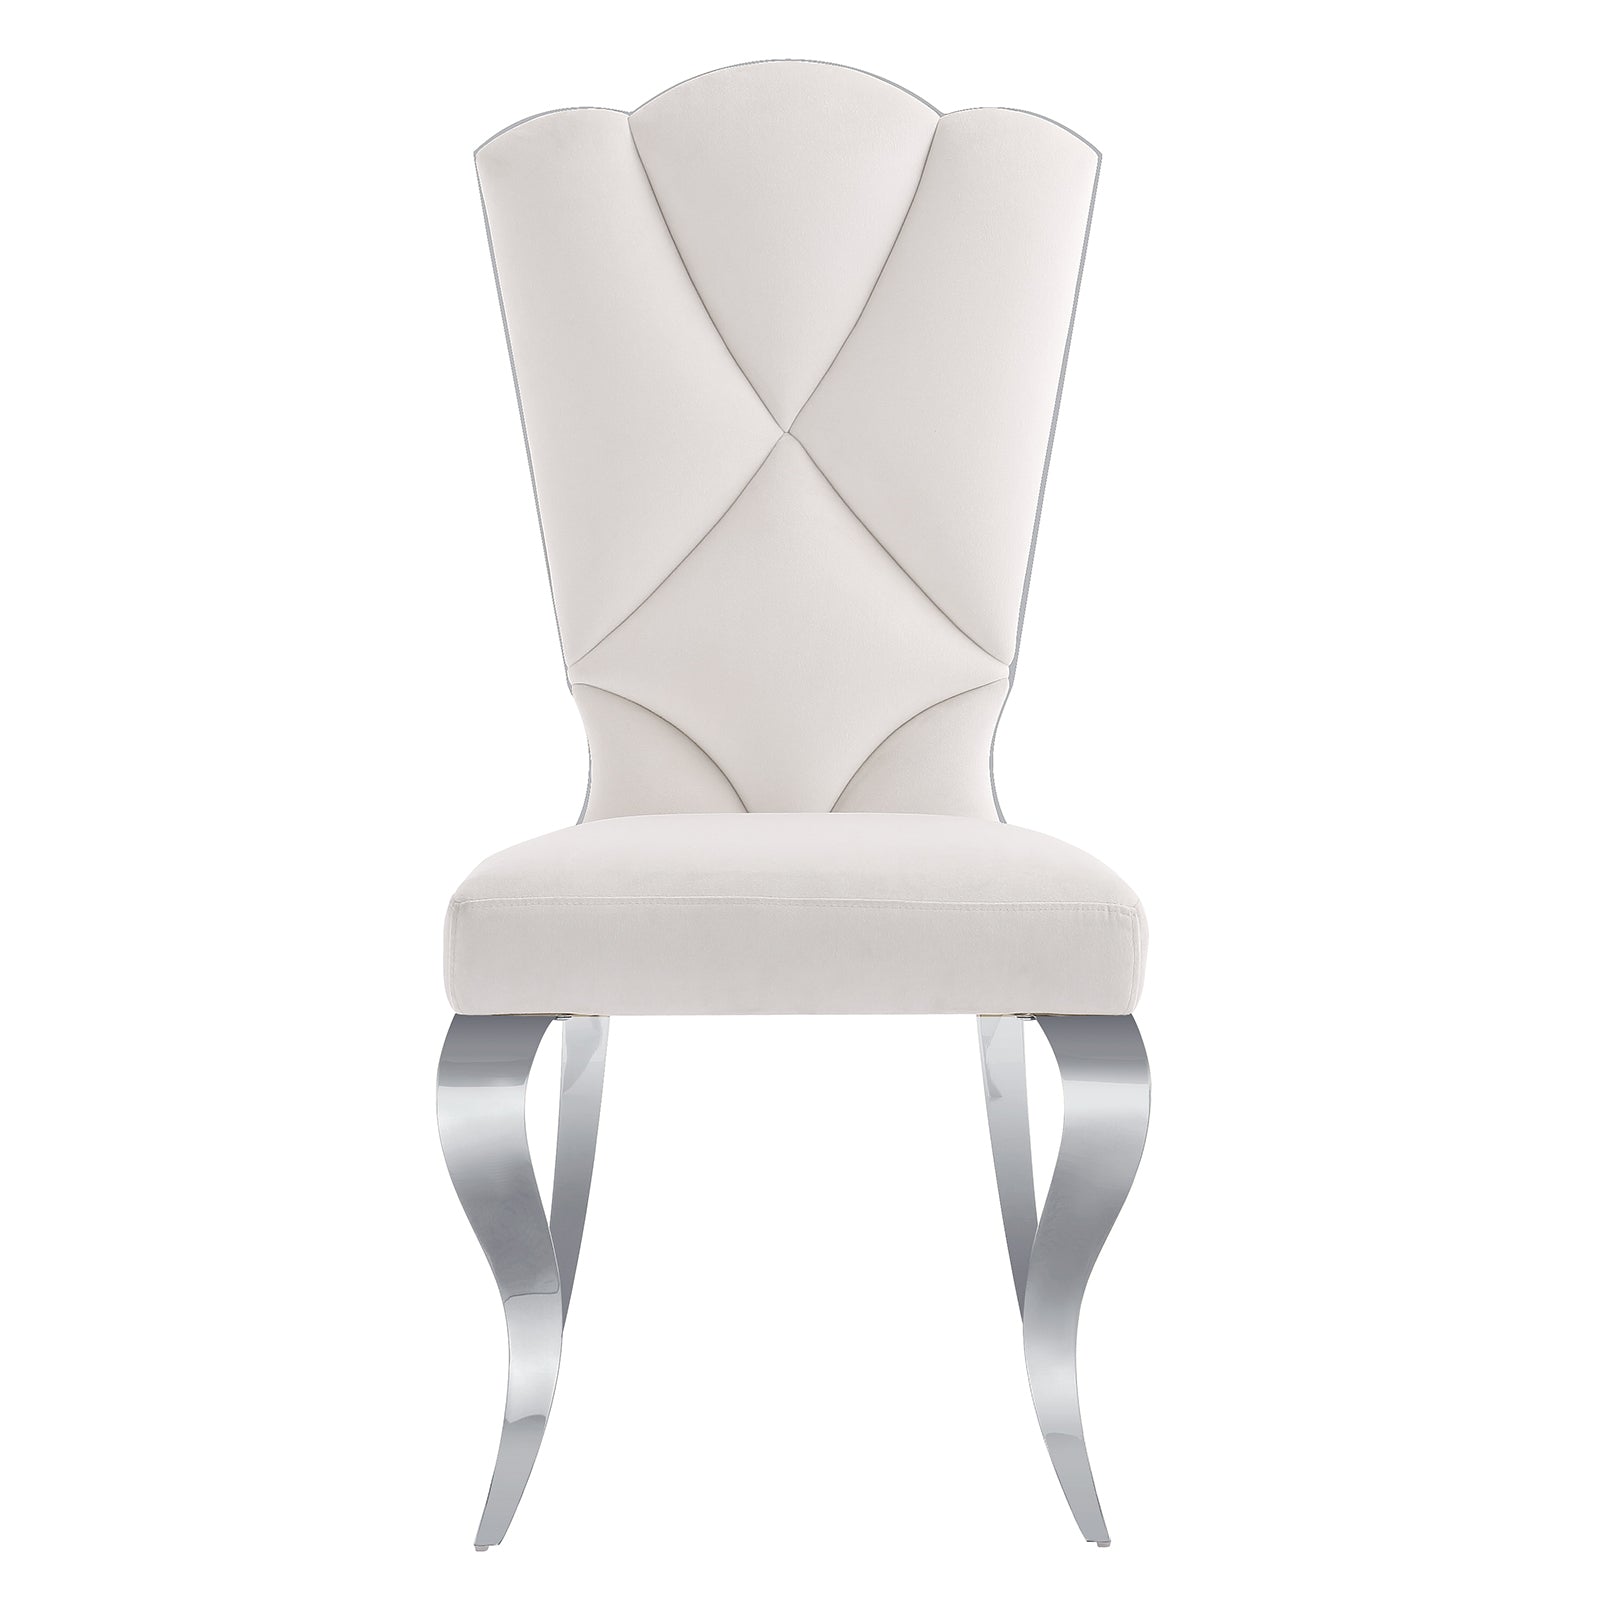 White velvet dining chairs | Cloud backrest design | Silver Metal legs | C141